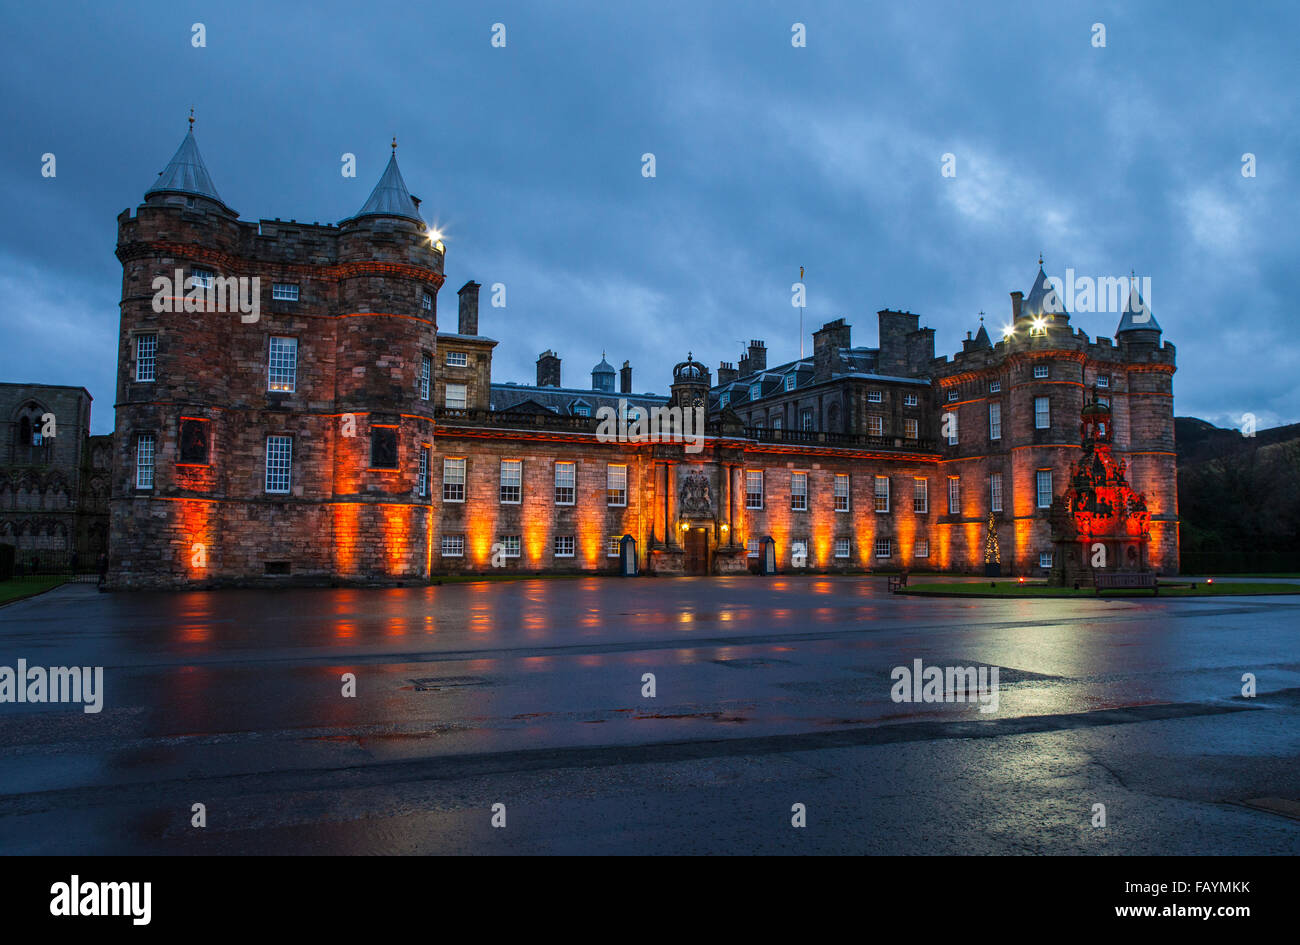 The historic Palace of Holyroodhouse in Edinburgh, Scotland. Stock Photo